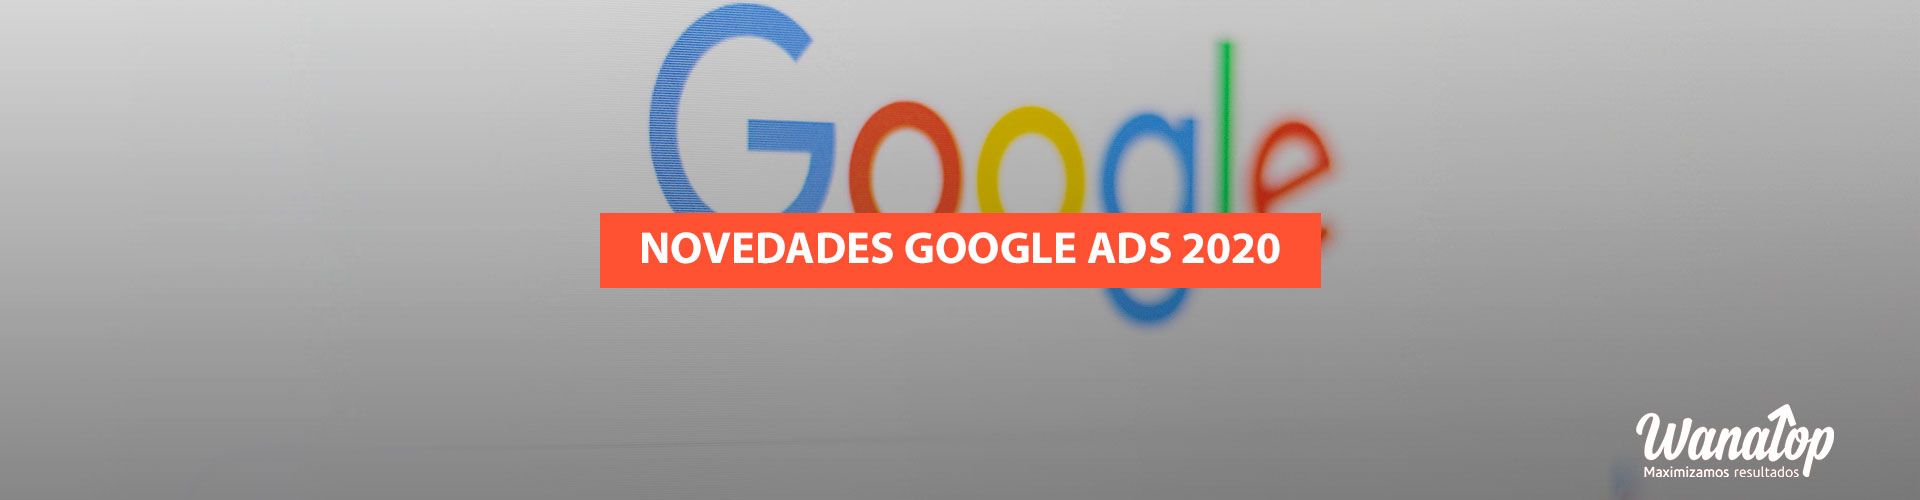 7 novedades de Google Ads en 2020